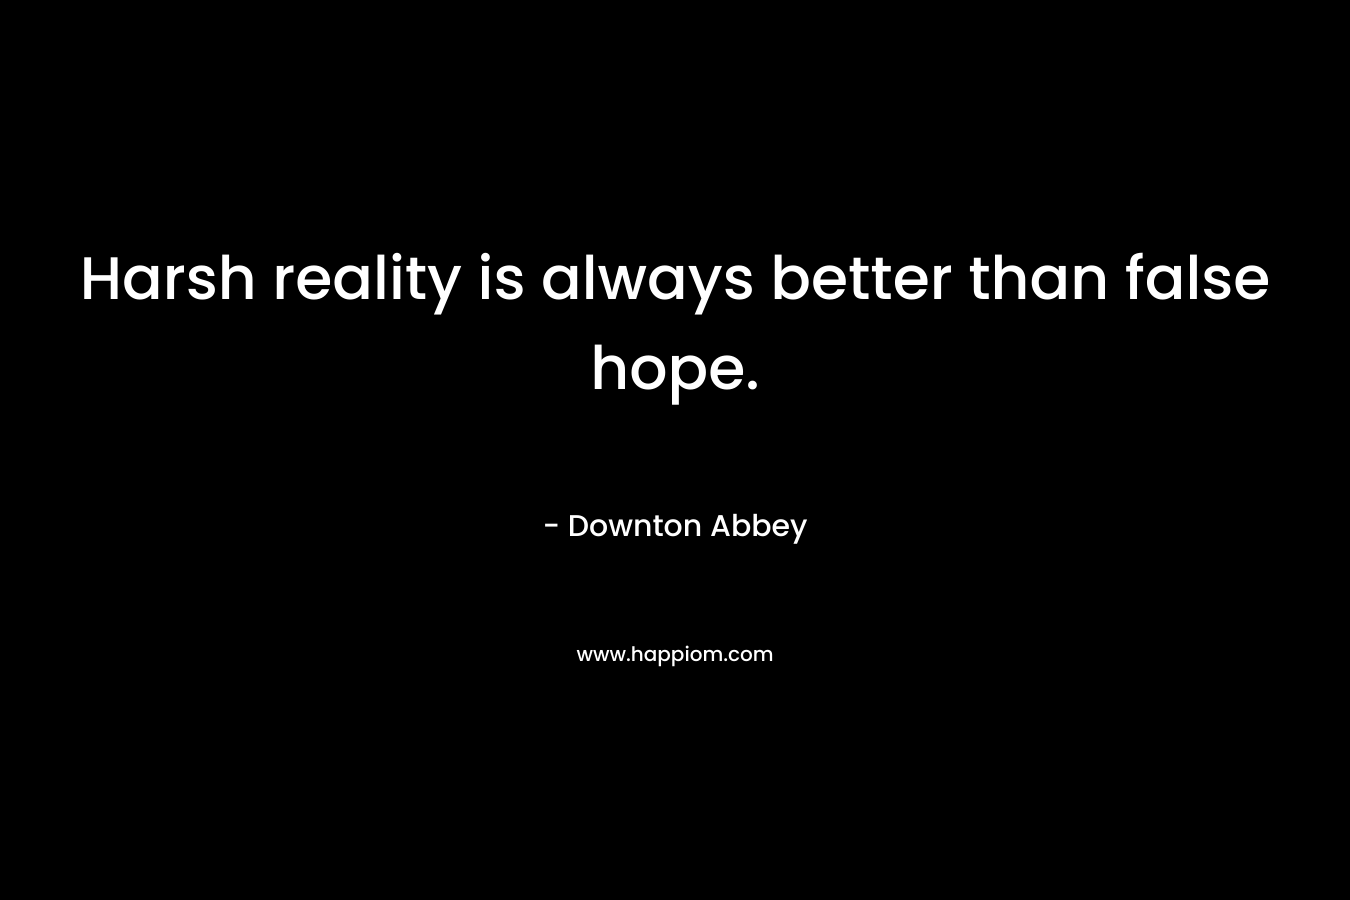 Harsh reality is always better than false hope.